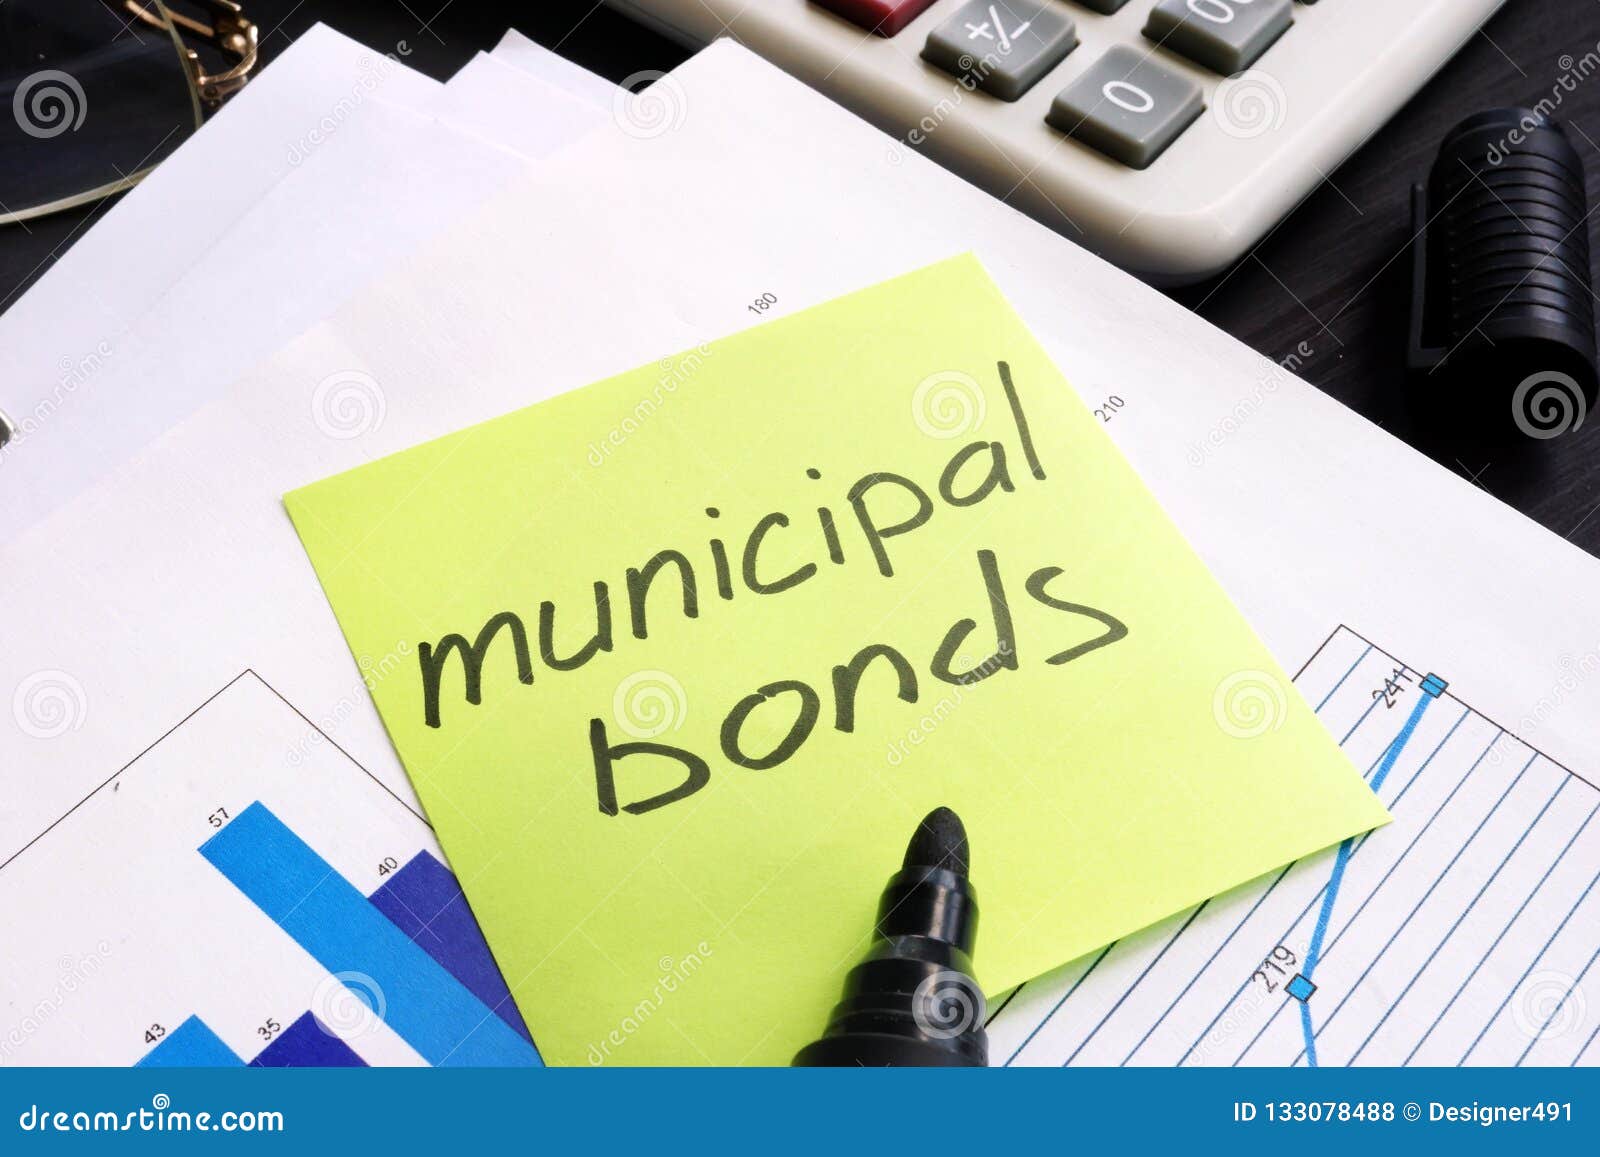 municipal bond written on a memo stick and documents